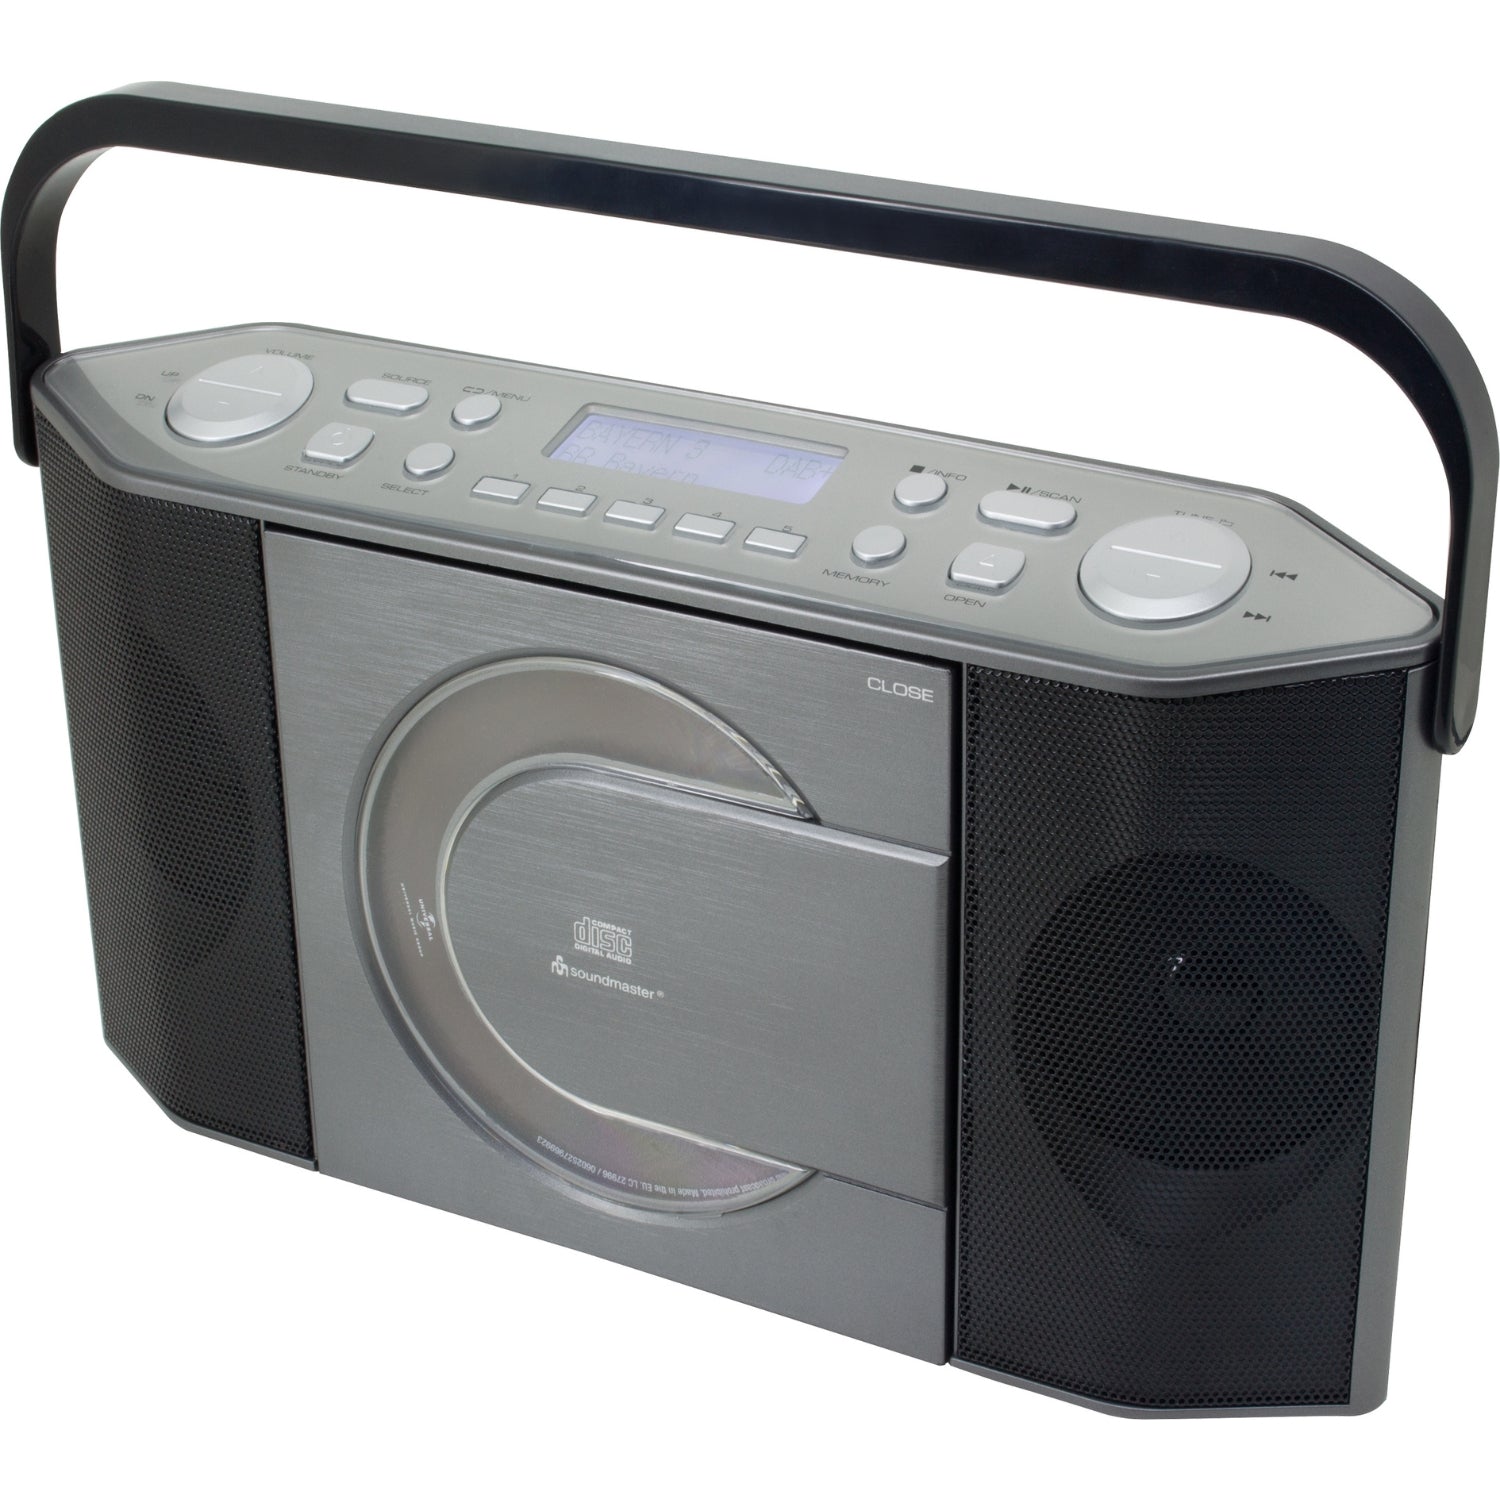 Soundmaster RCD1770AN DAB+ UKW Digitalradio mit USB CD MP3 Spieler